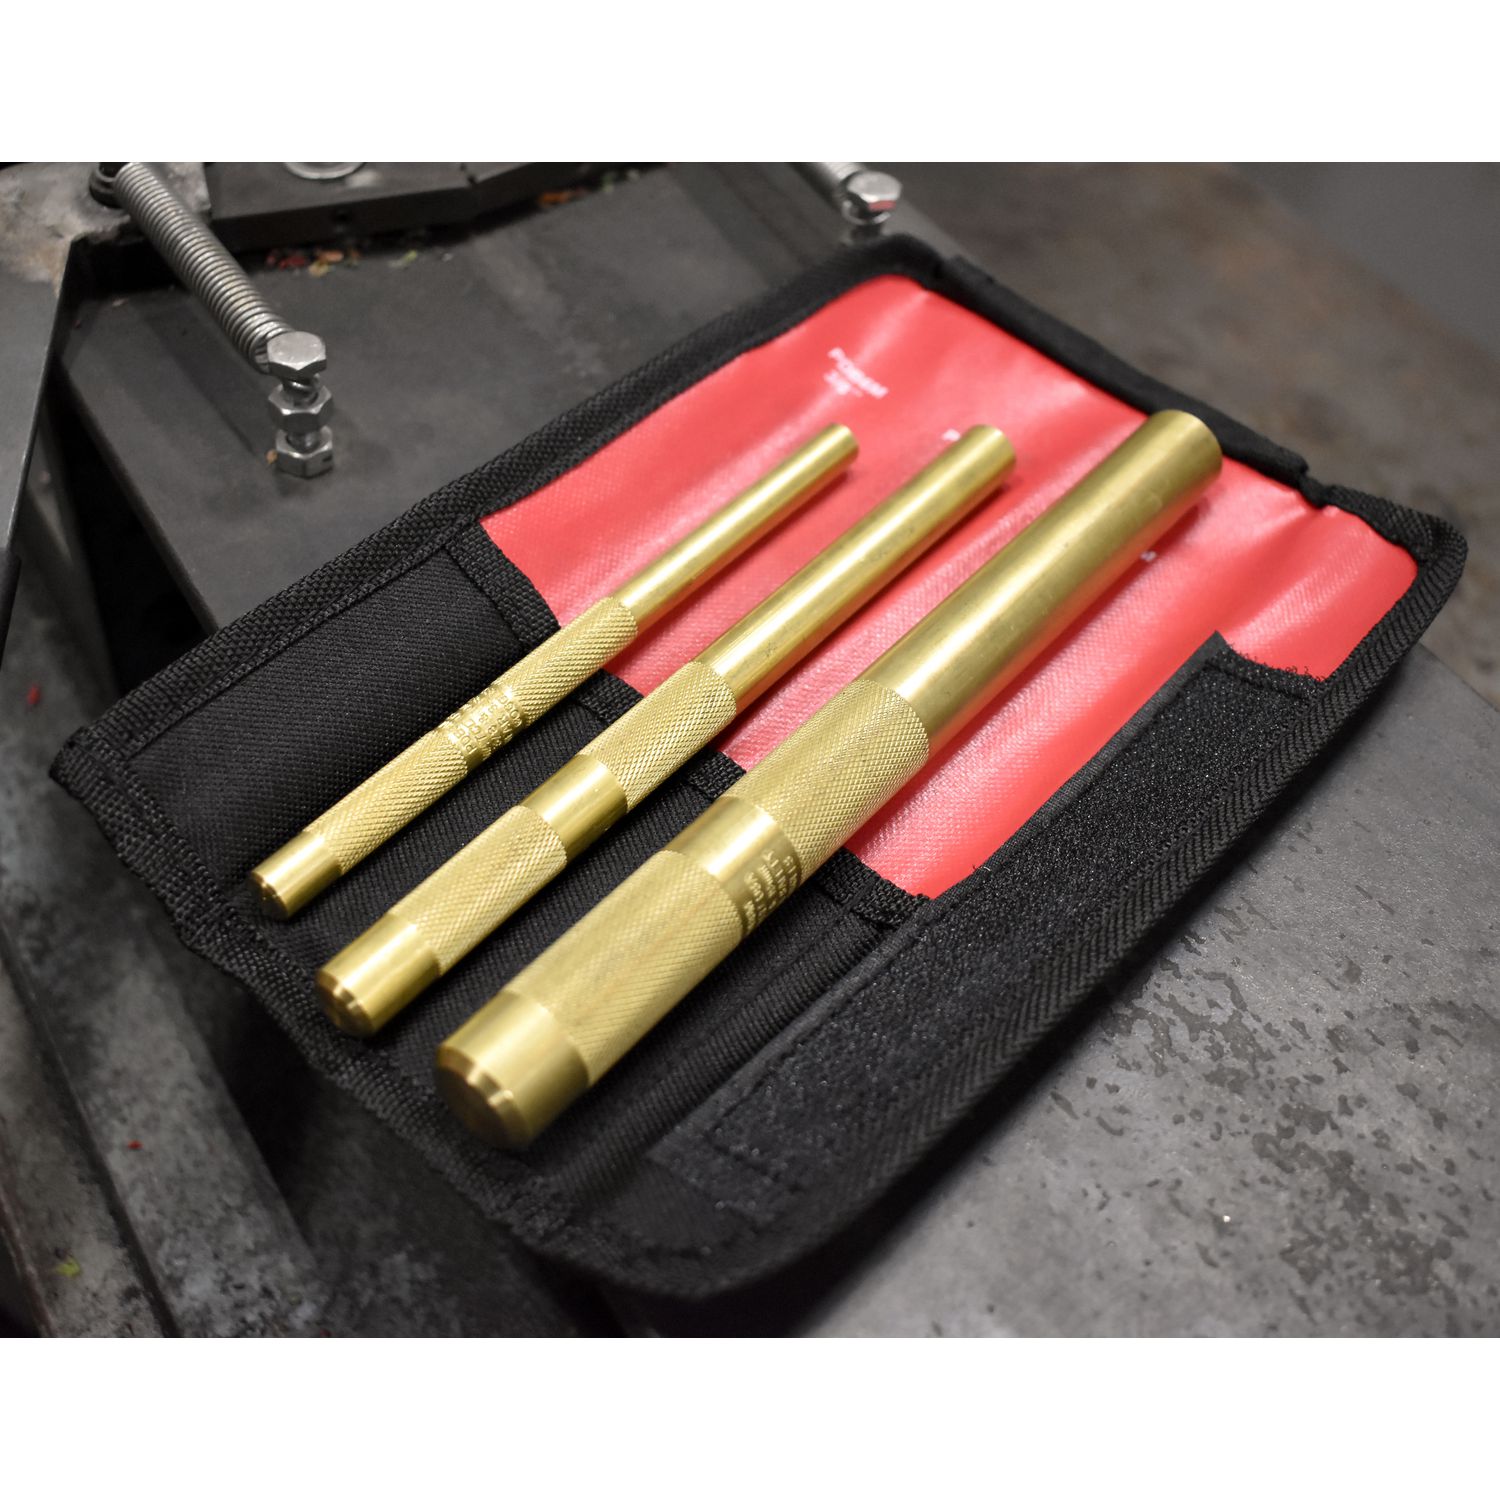 Keysco Tools 77767 Pin Punch Set,Length 8 In,Brass,4PC